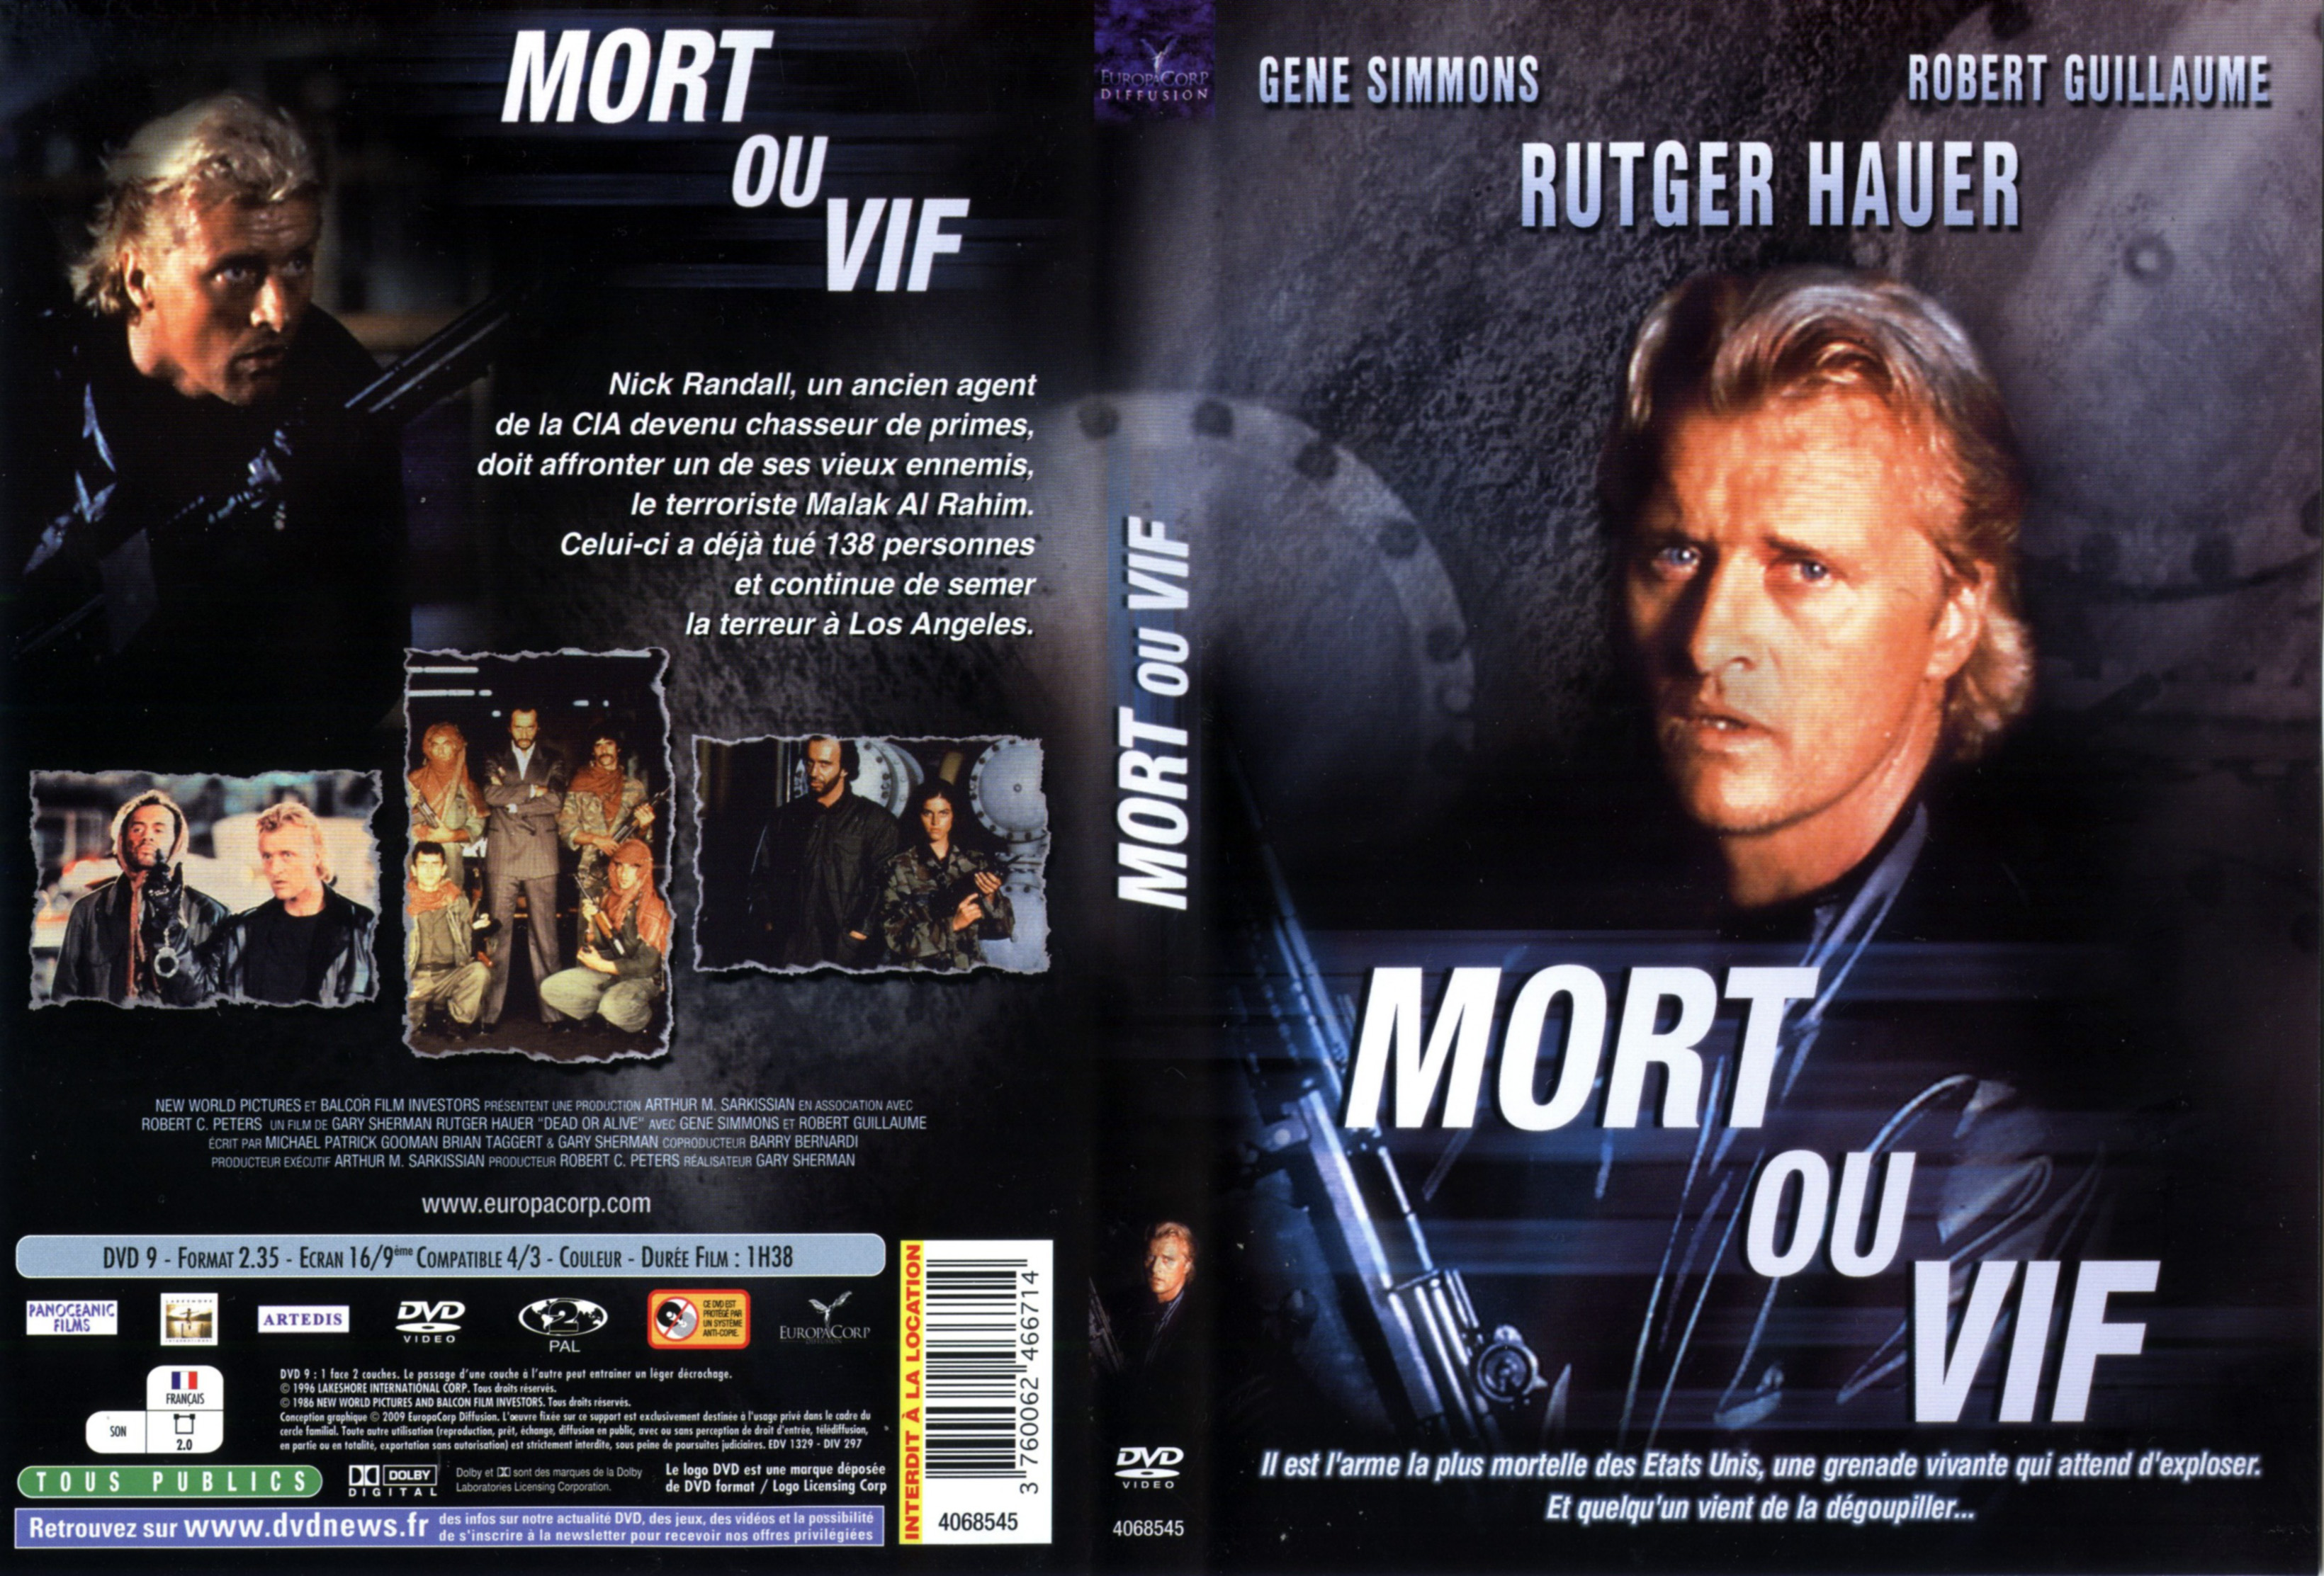 Jaquette DVD Mort ou vif (Rutger Hauer)